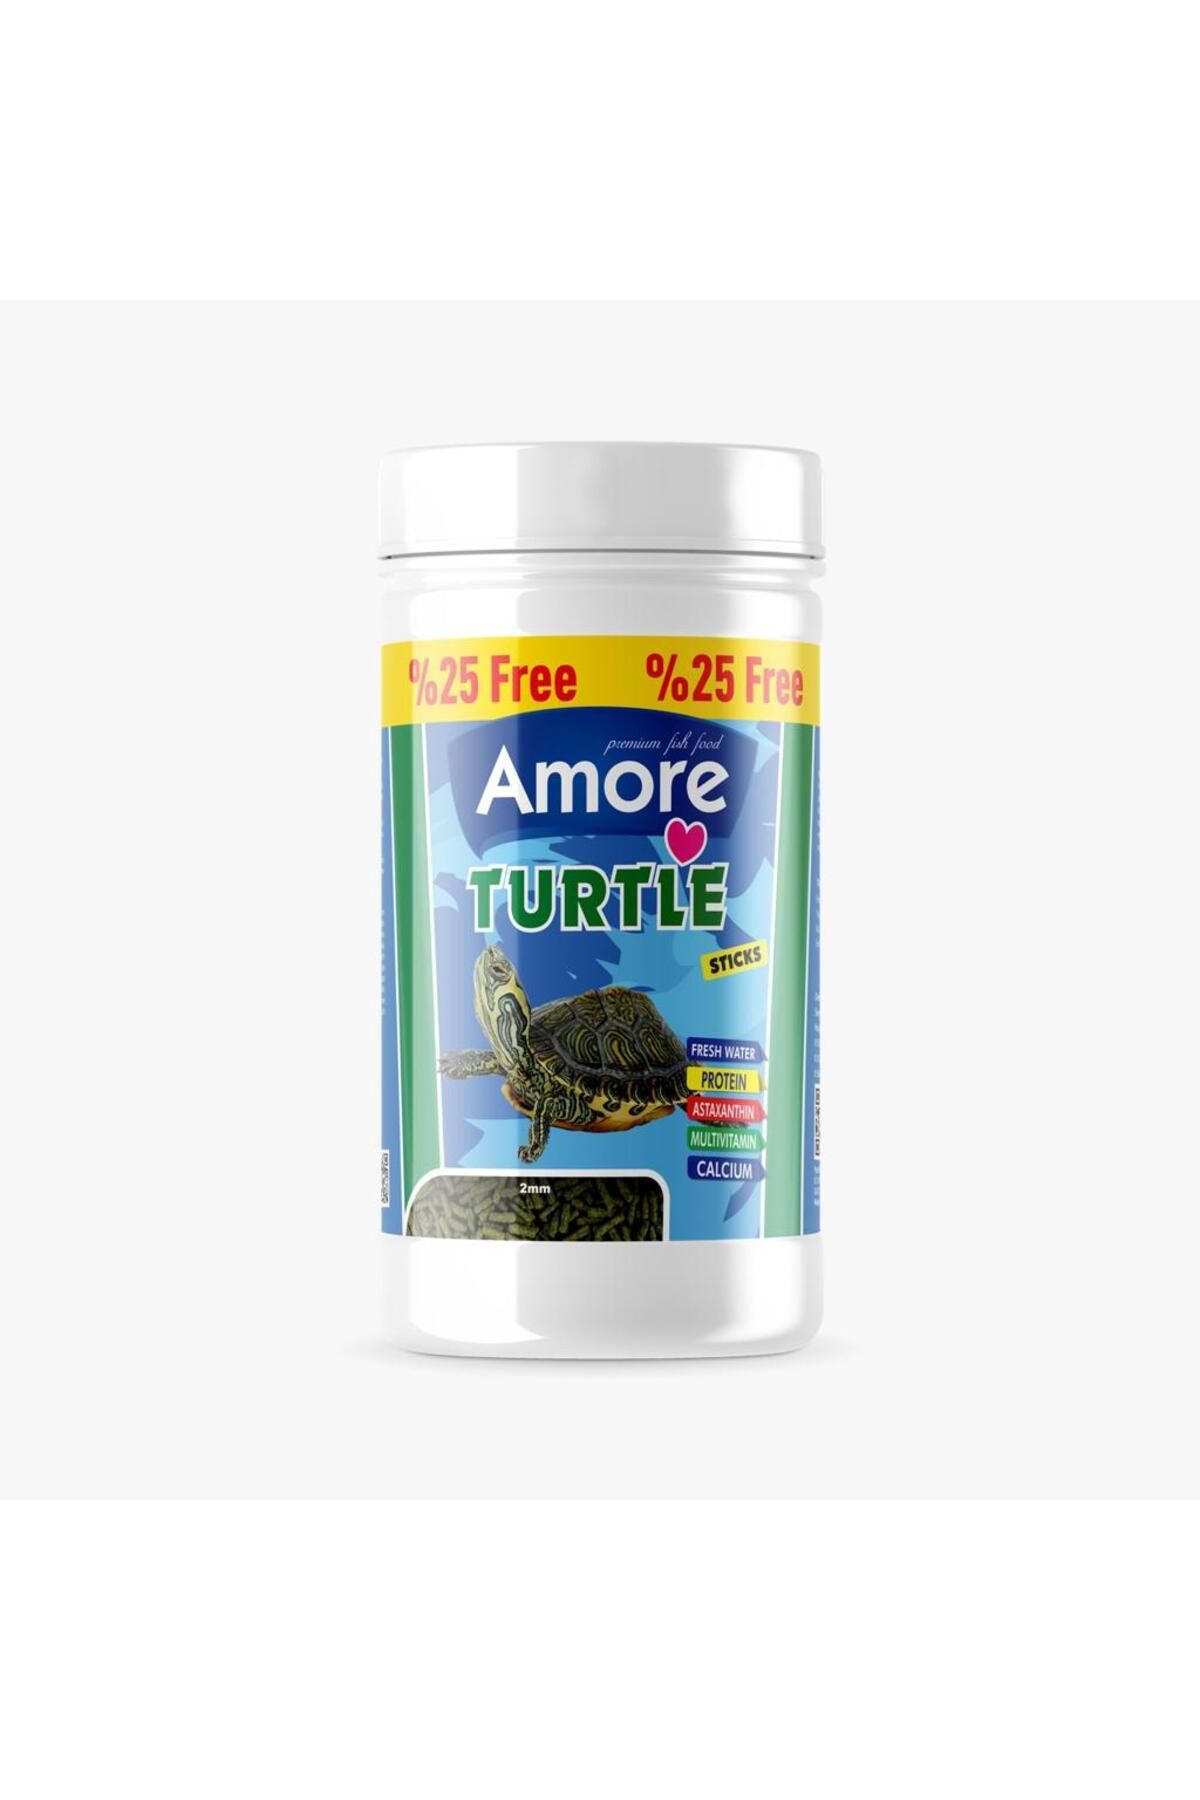 Amore Turtle Calcium Green Sticks 10x125 ml Su Kaplumbagasi Yuzen Yemi, Terrapin 2x100ml